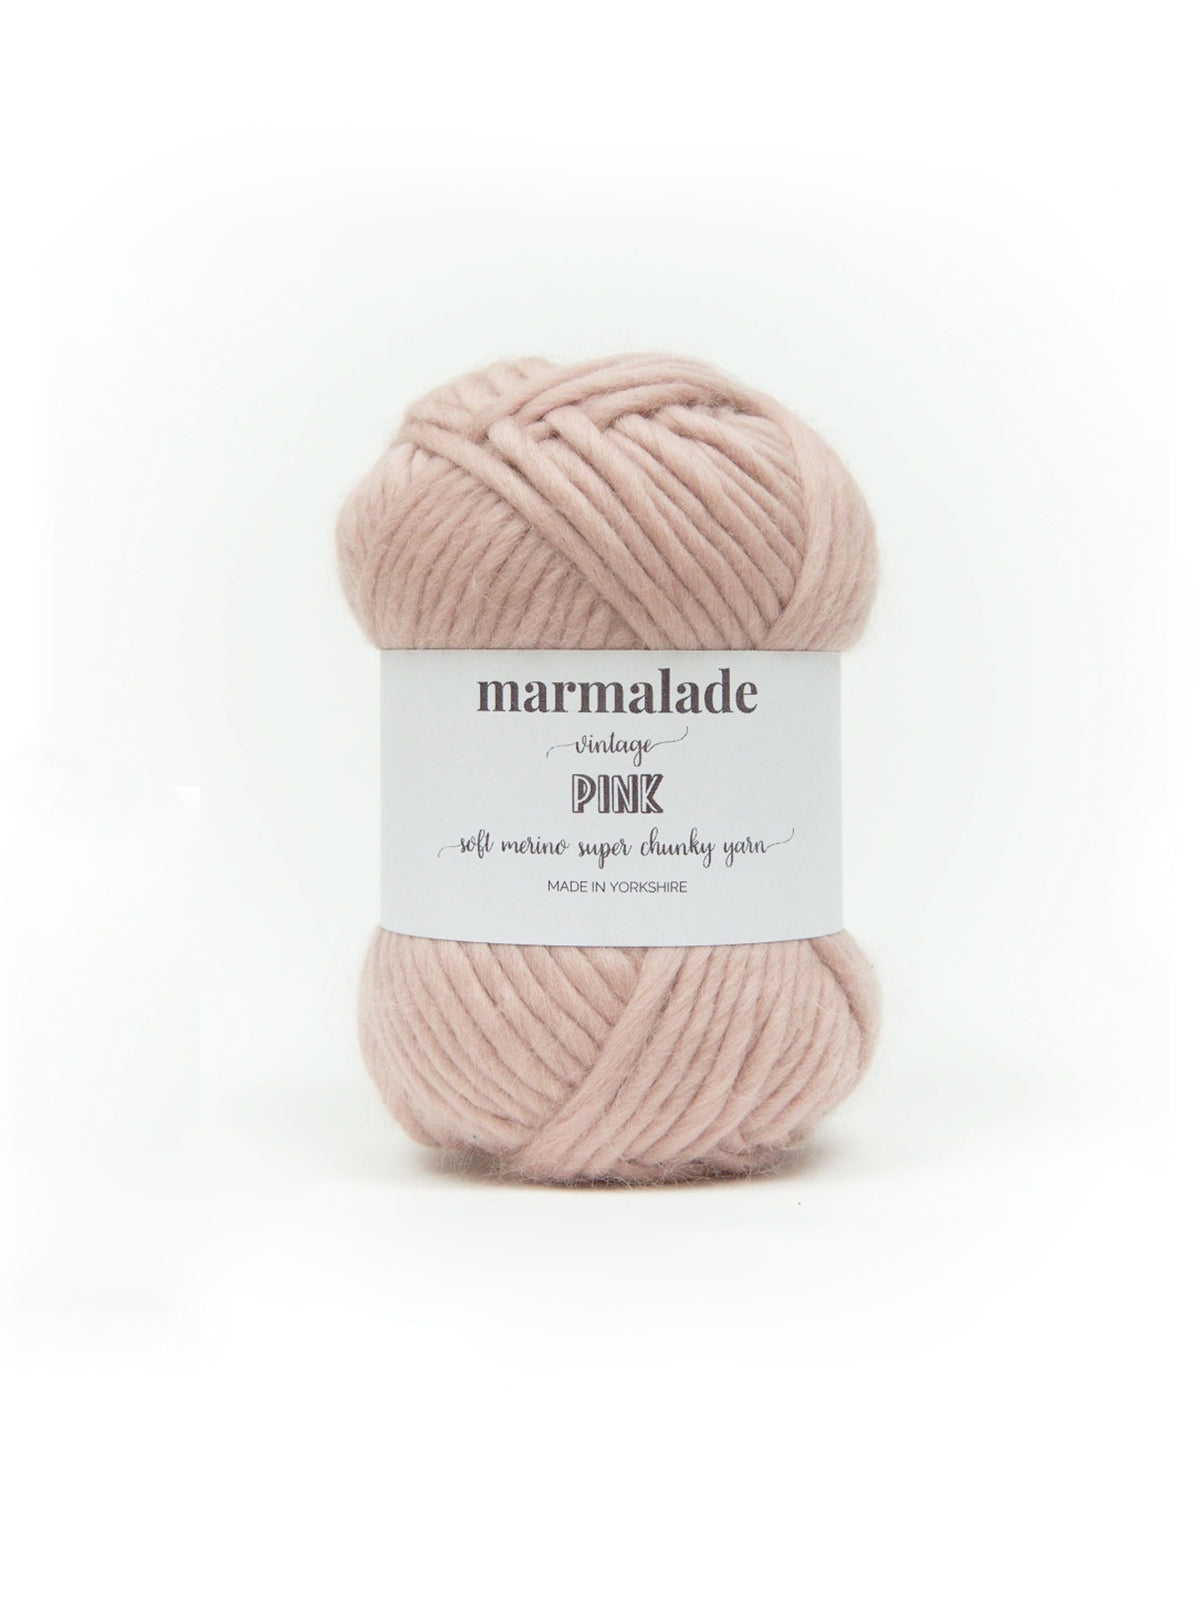 dirty pink merino super chunky yarn from marmalade